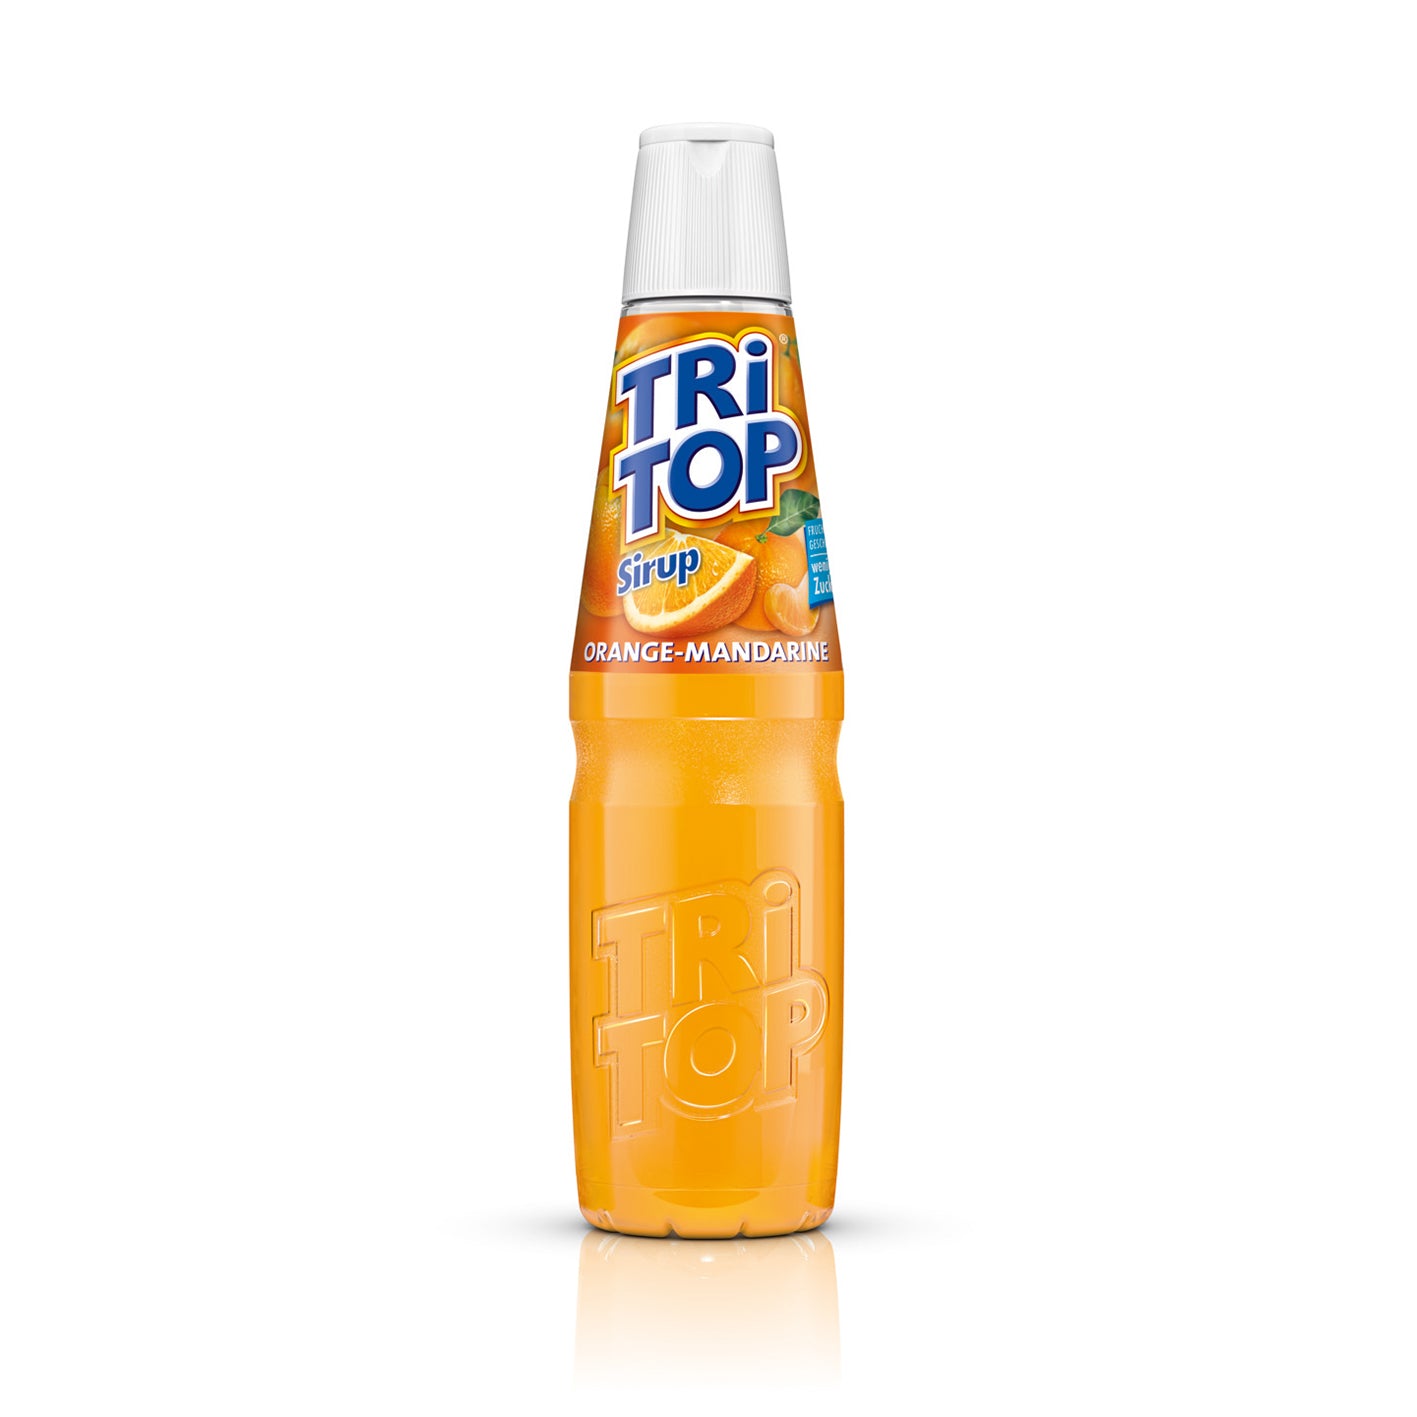 TRi TOP Sirup Orange-Mandarine - 600 ml